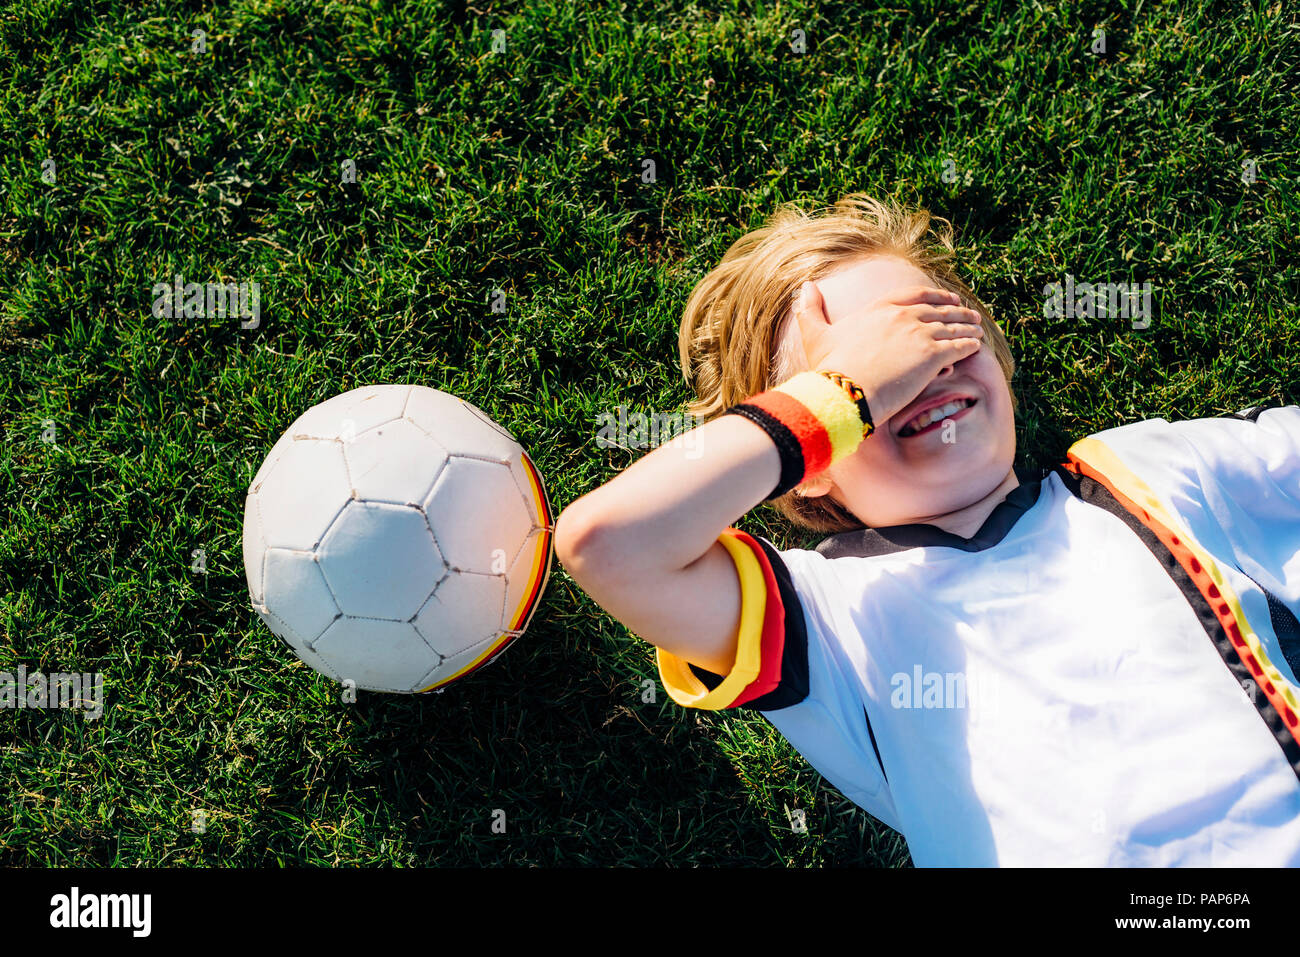 Boy in German soccer shirt lying on grass, covering eyes Stock Photo